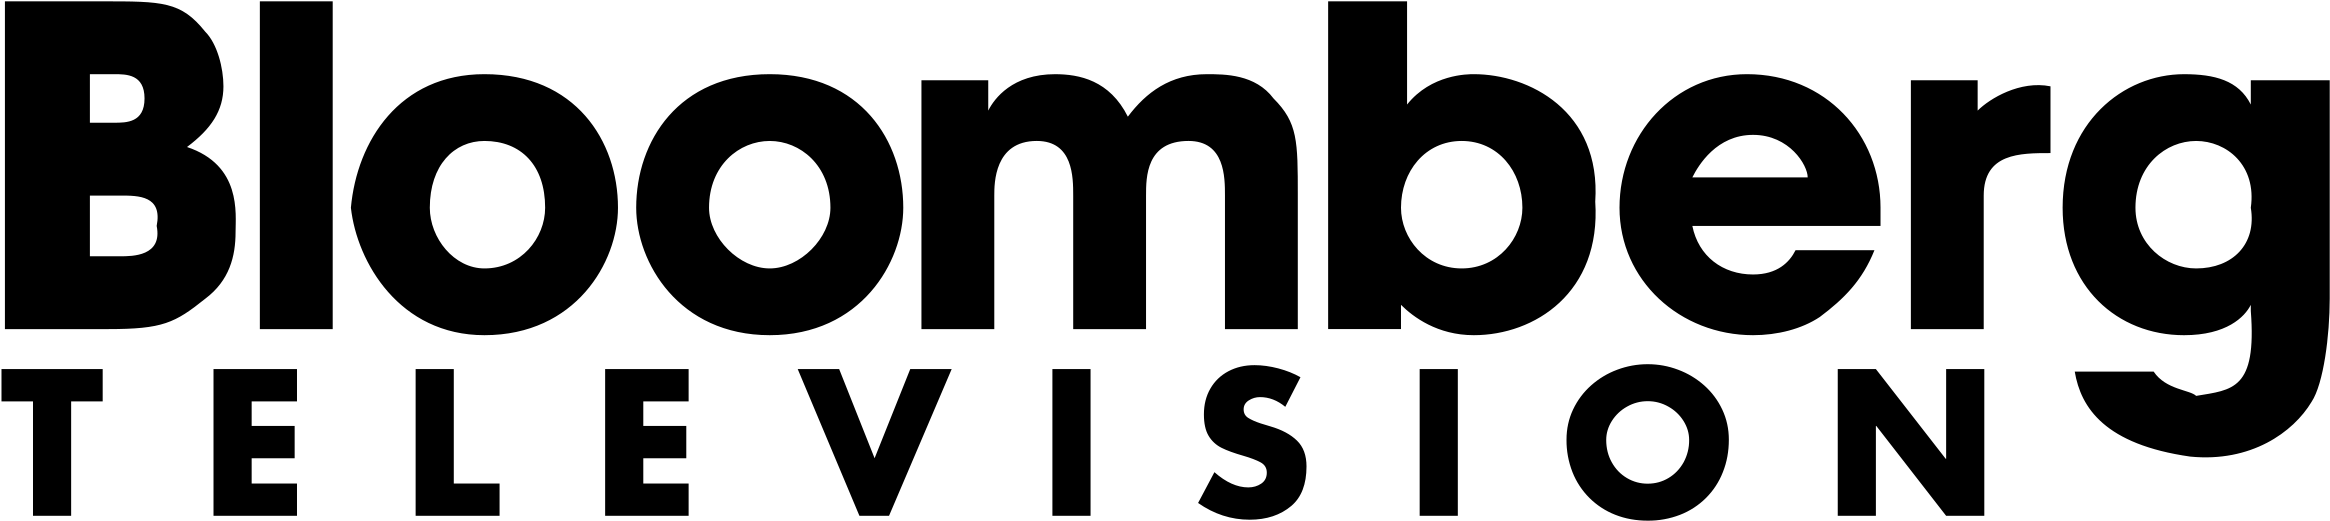 Bloomberg Television Logo Png Transparent - Bloomberg Television Vector Logo Clipart (2400x2400), Png Download